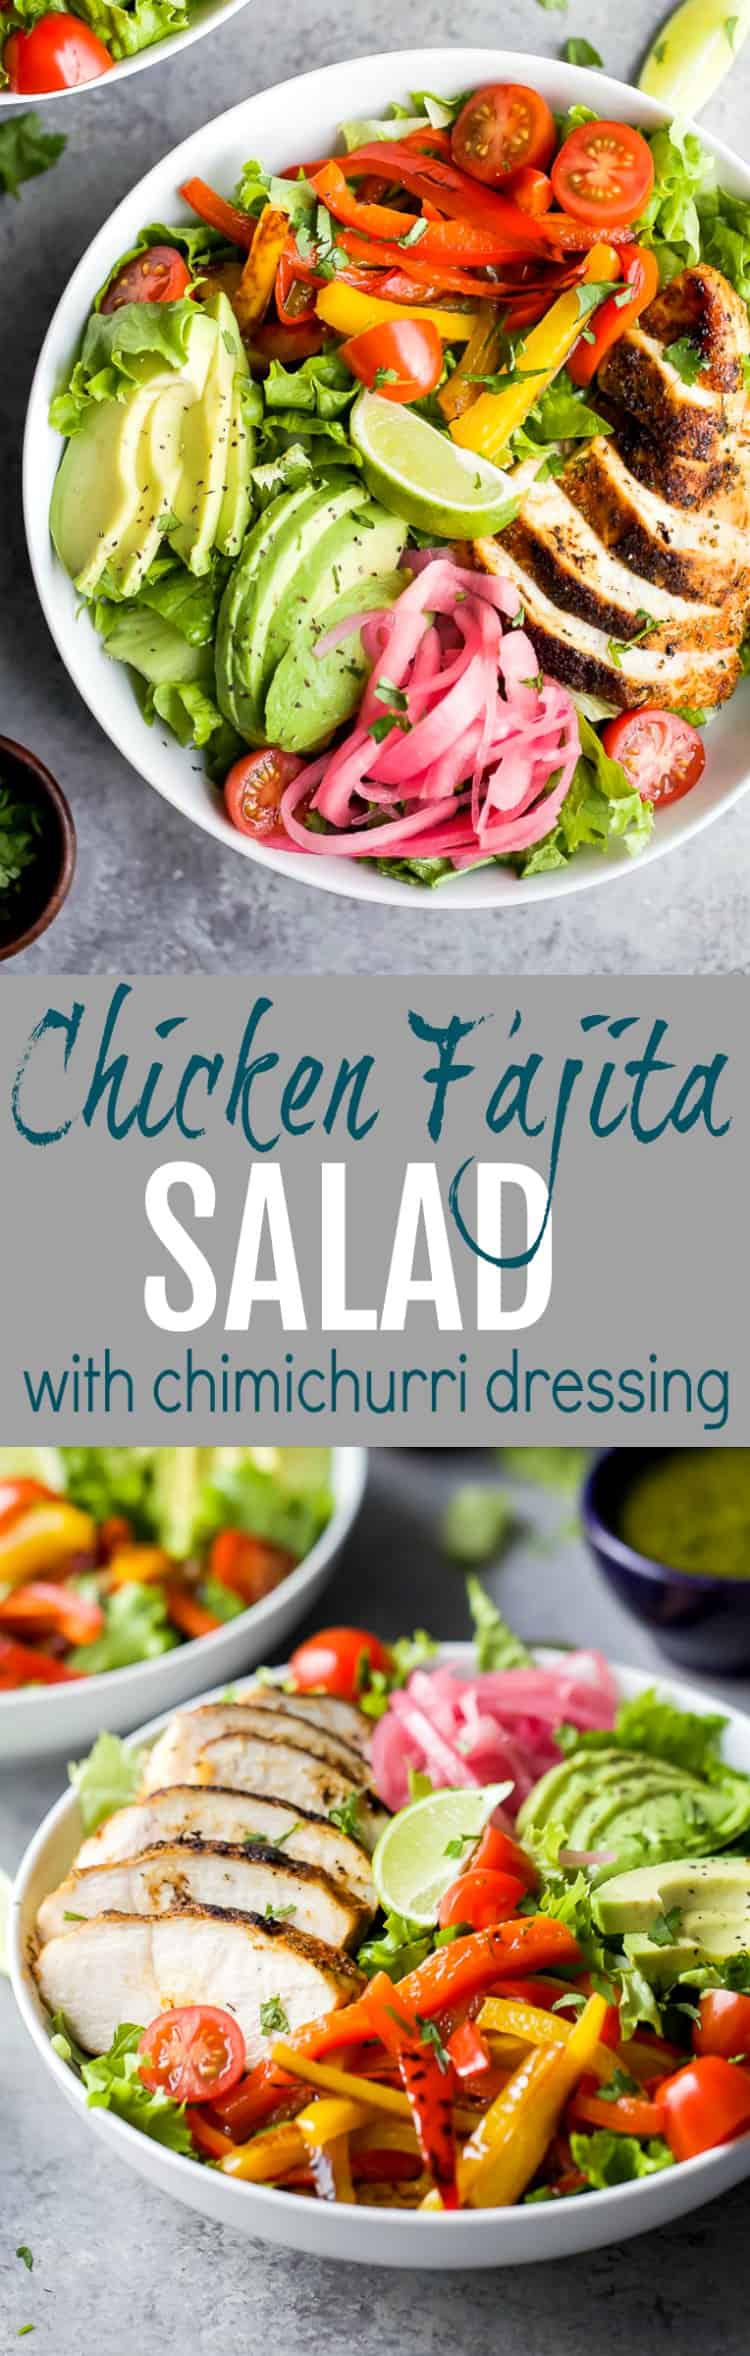 Pinterest collage for Chicken Fajita Salad with Chimichurri Dressing recipe